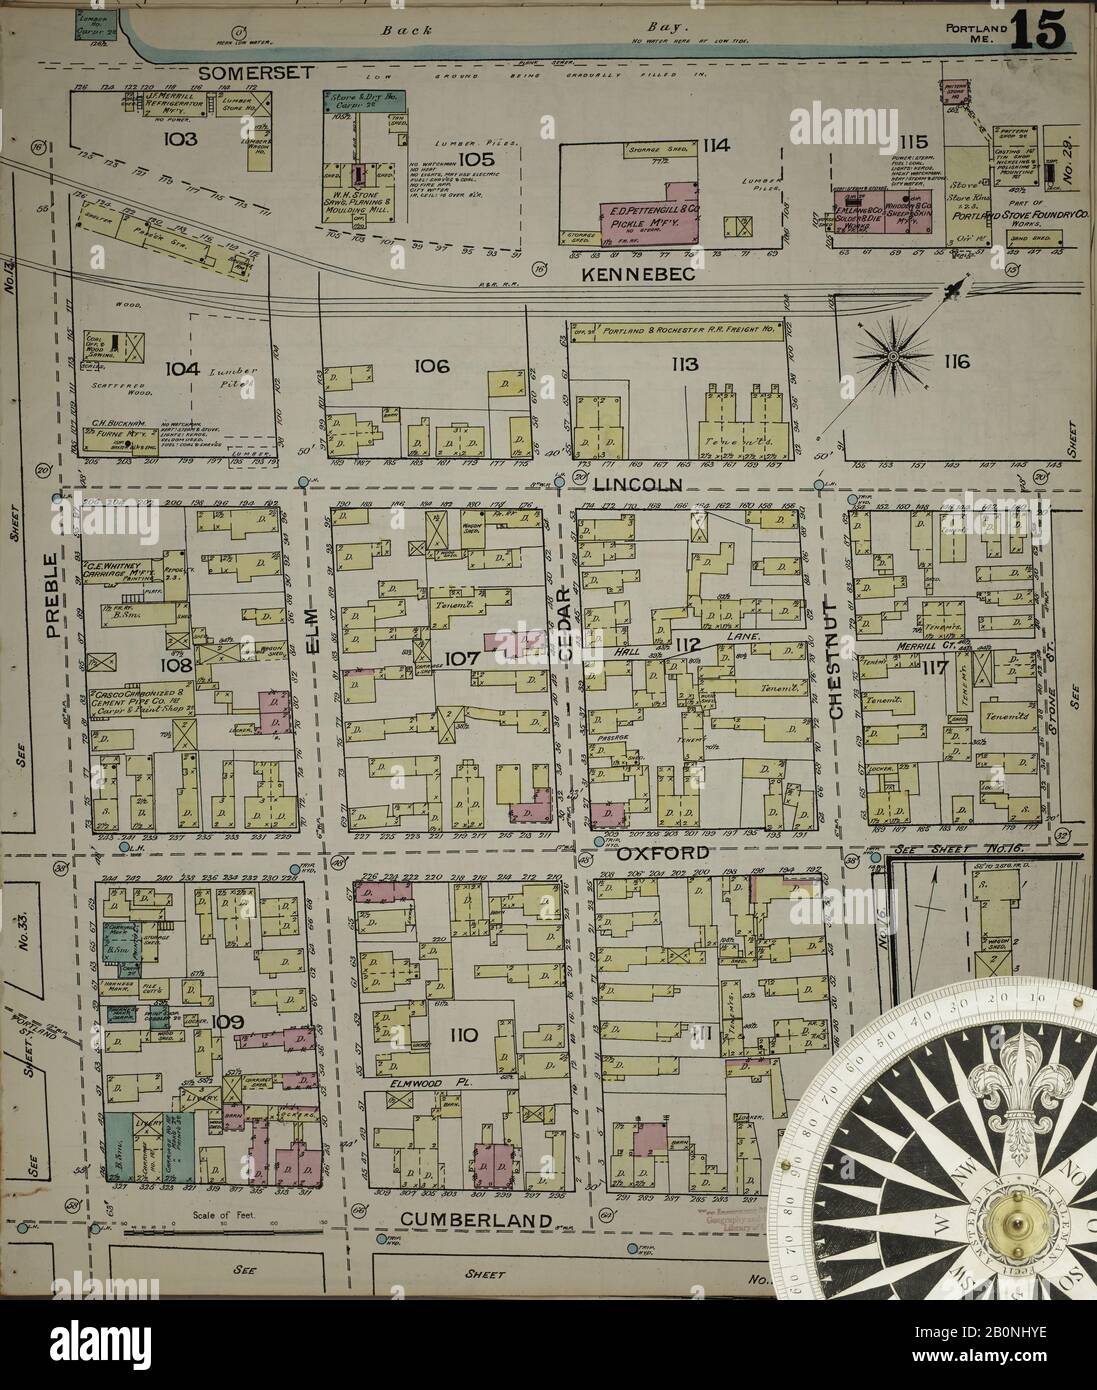 Imagen 15 De Sanborn Fire Insurance Map De Portland, Cumberland County, Maine. 1886. 35 Hoja(s). Bound, América, mapa de calles con una brújula del siglo Xix Foto de stock